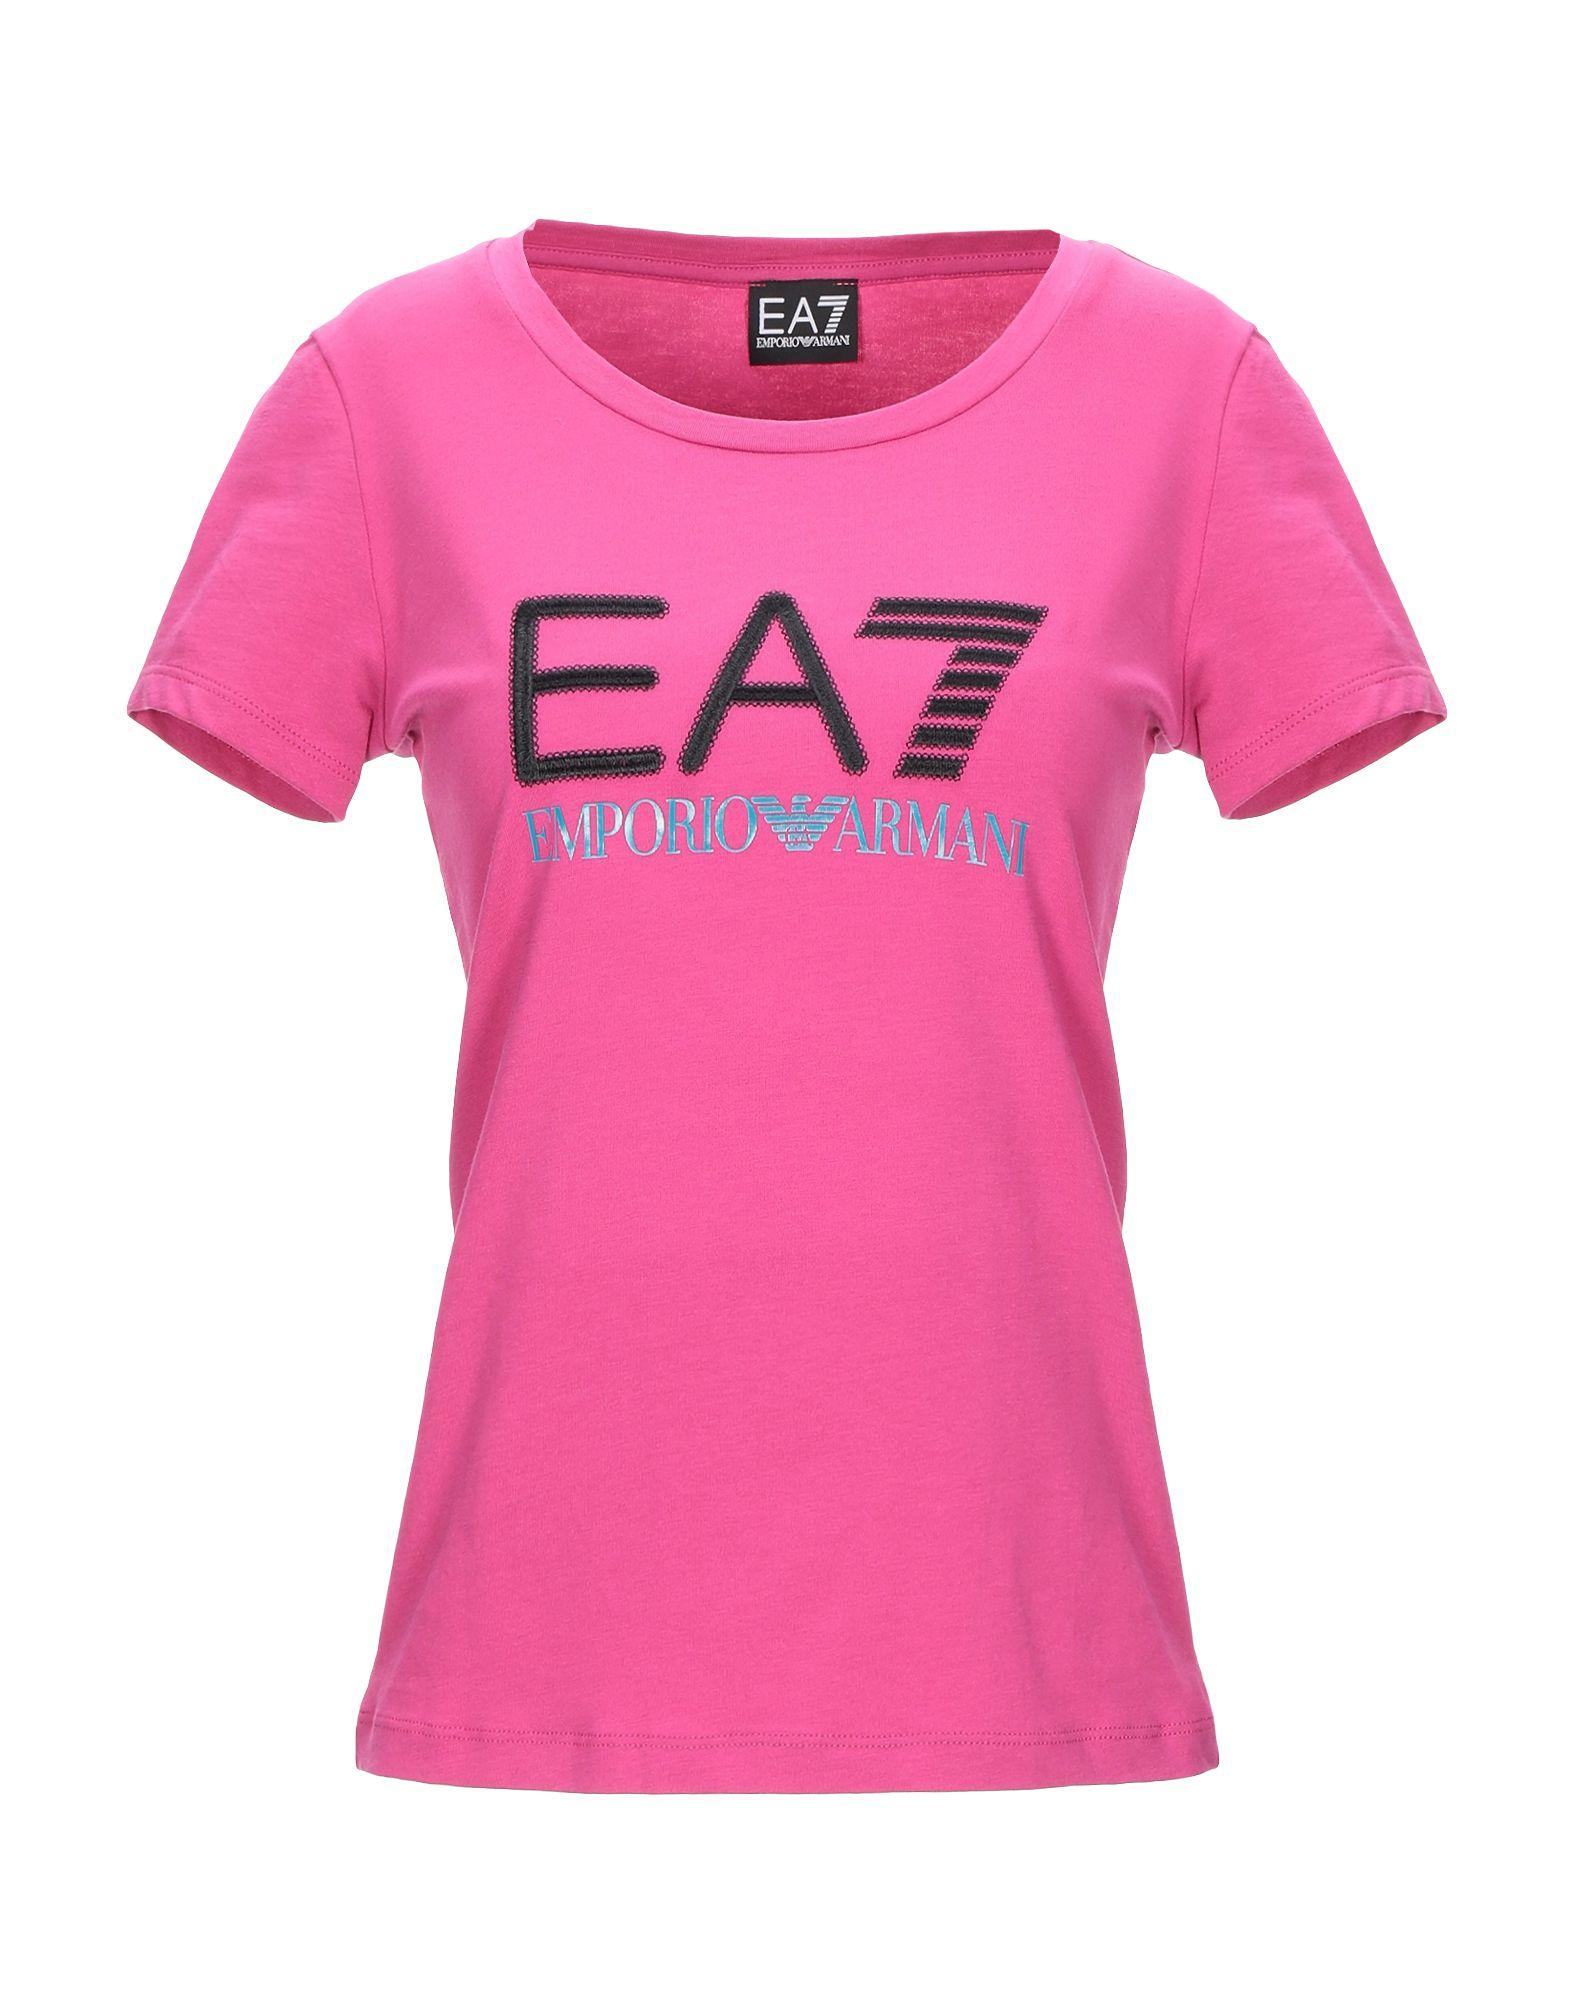 EA7 T-shirt in Fuchsia (Pink) - Lyst